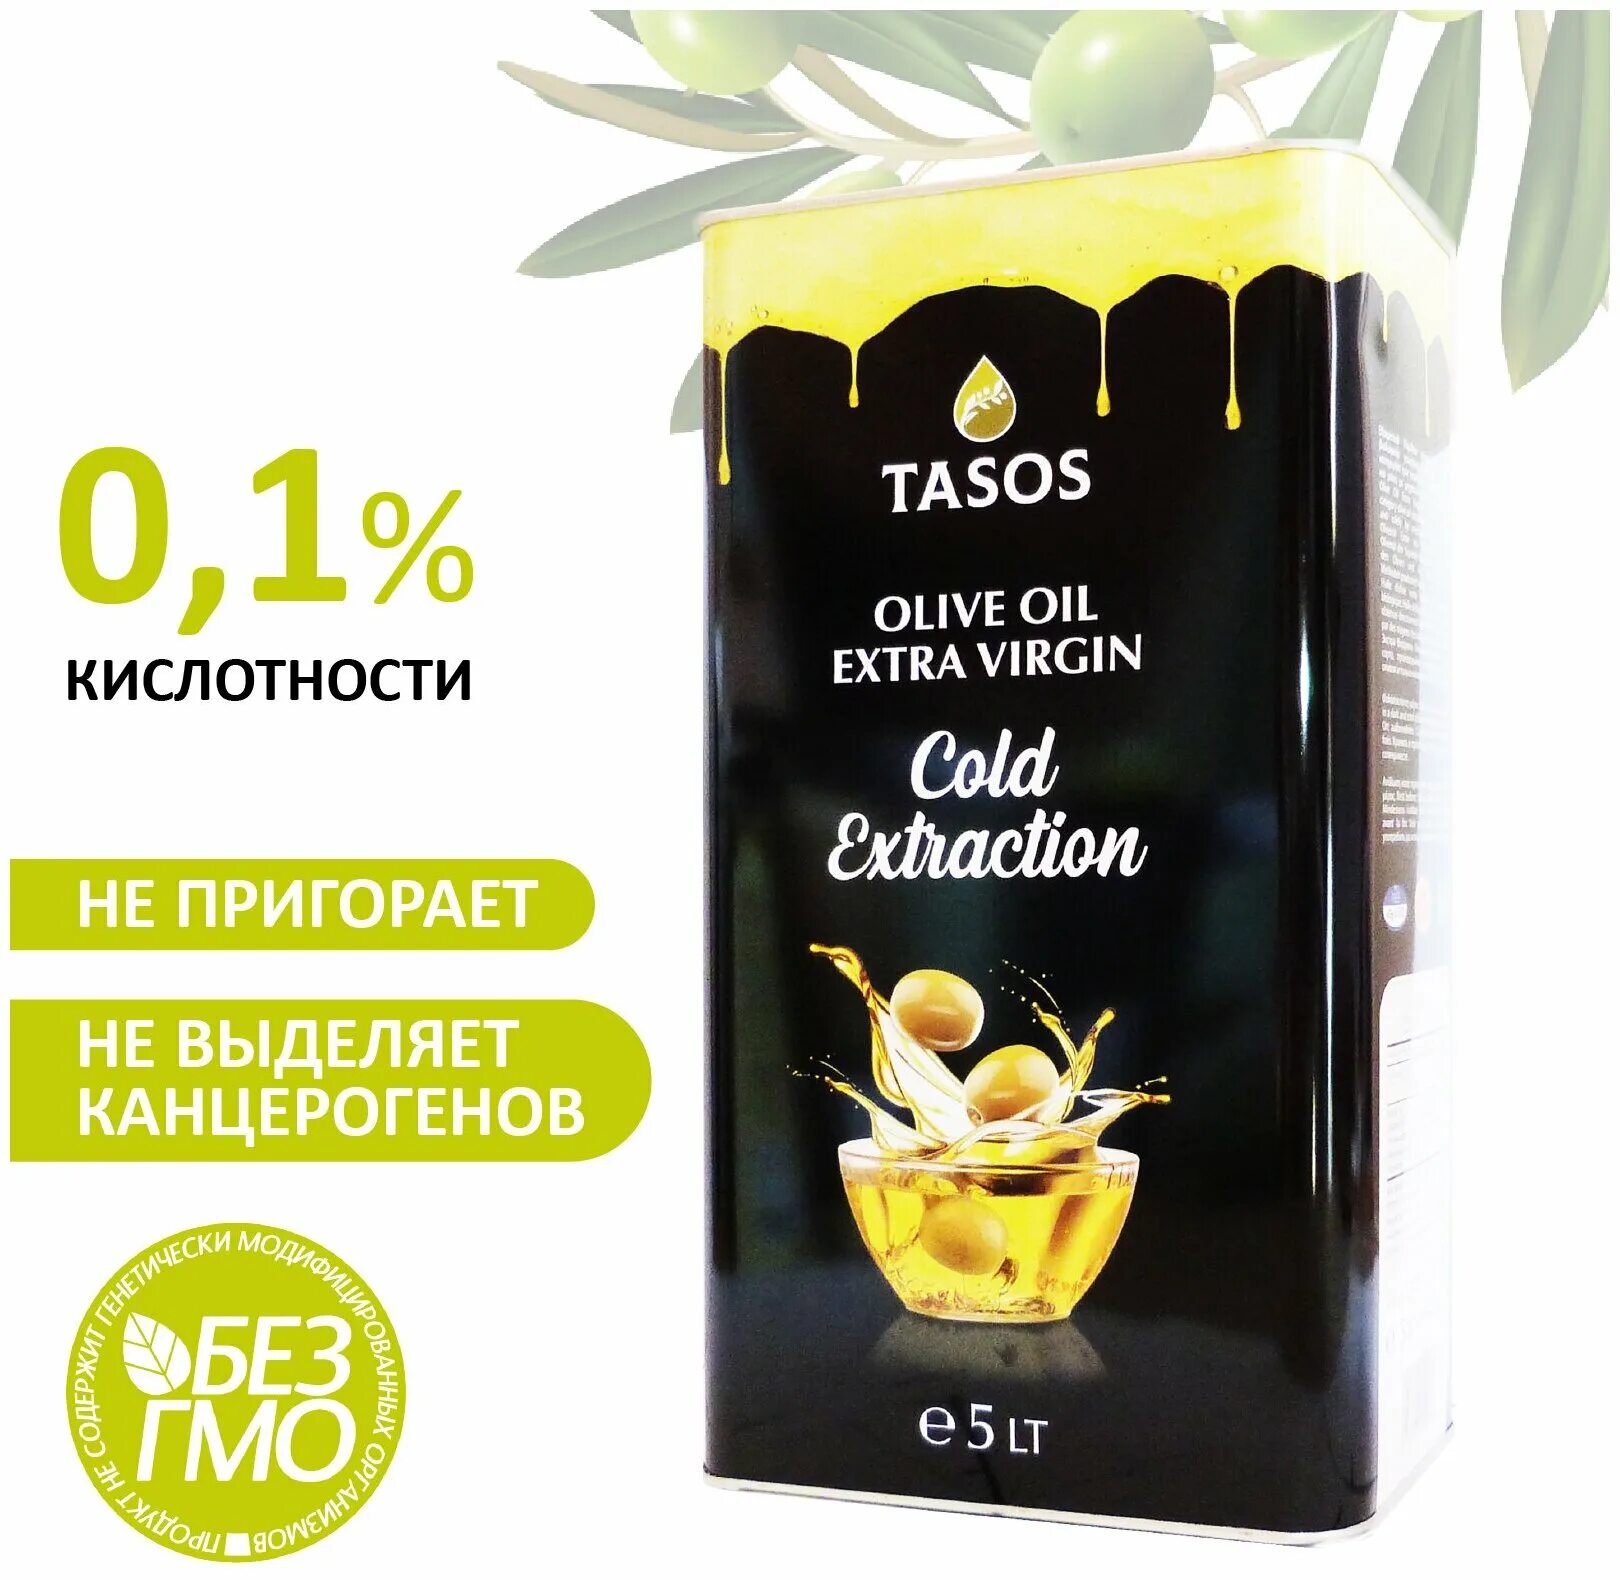 Tasos масло оливковое. Tasos масло оливковое 5 литров. Салат с маслом. Масло оливковое Extra Virgin Oliva Oil 5 литр. Оливковое масло tasos